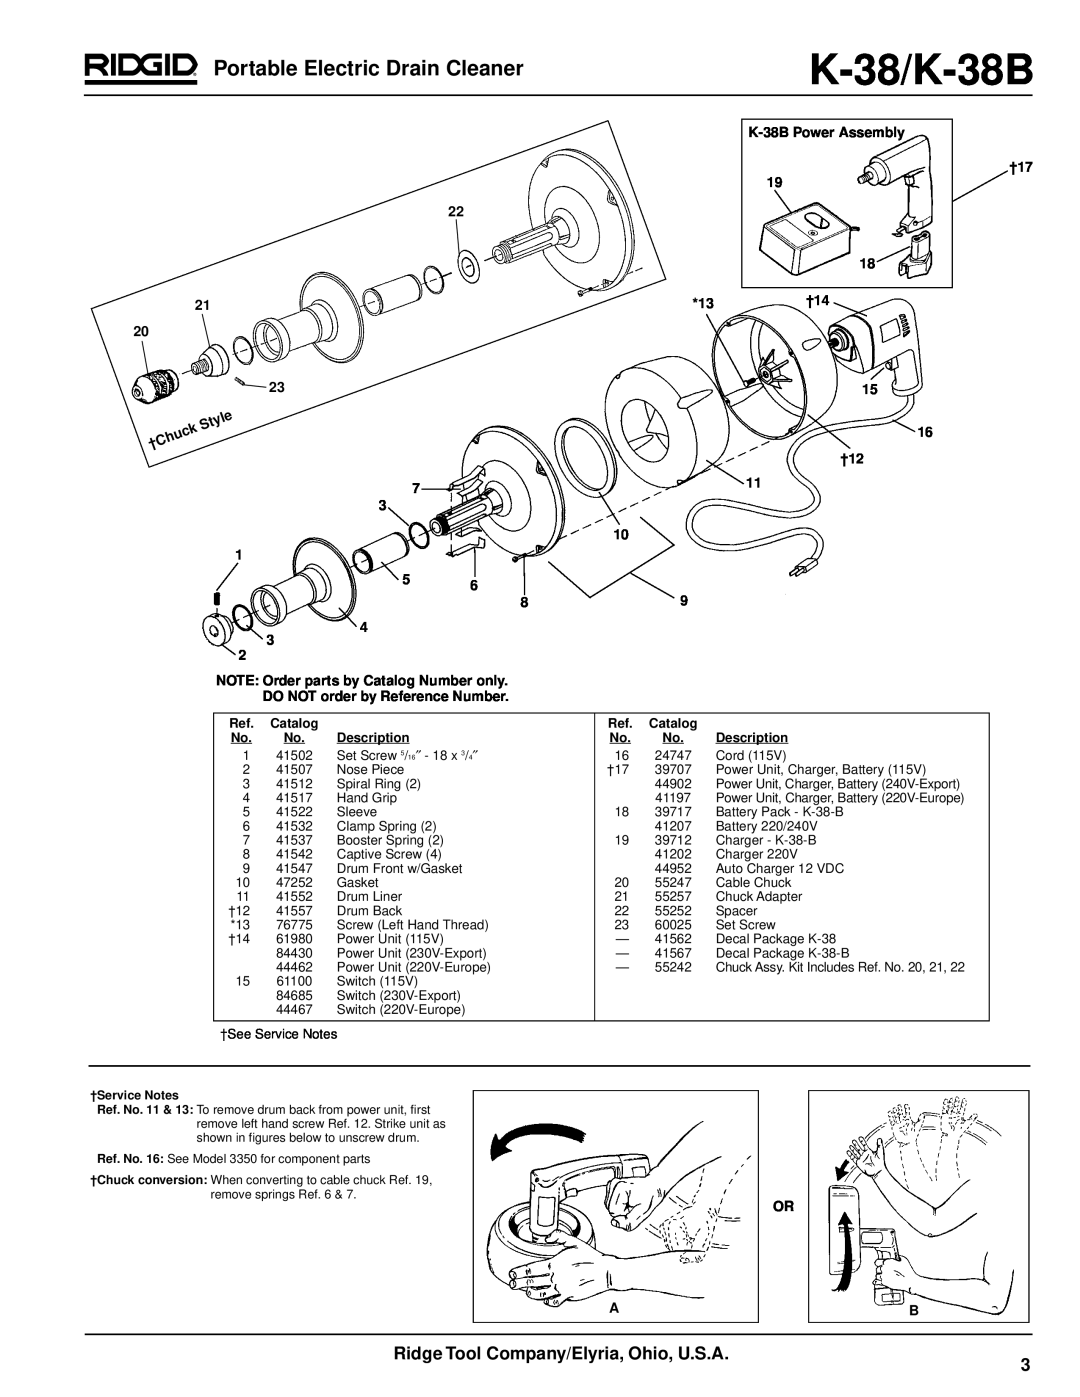 RIDGID manual K-38/K-38B, Portable Electric Drain Cleaner, Ridge Tool Company/Elyria, Ohio, U.S.A 